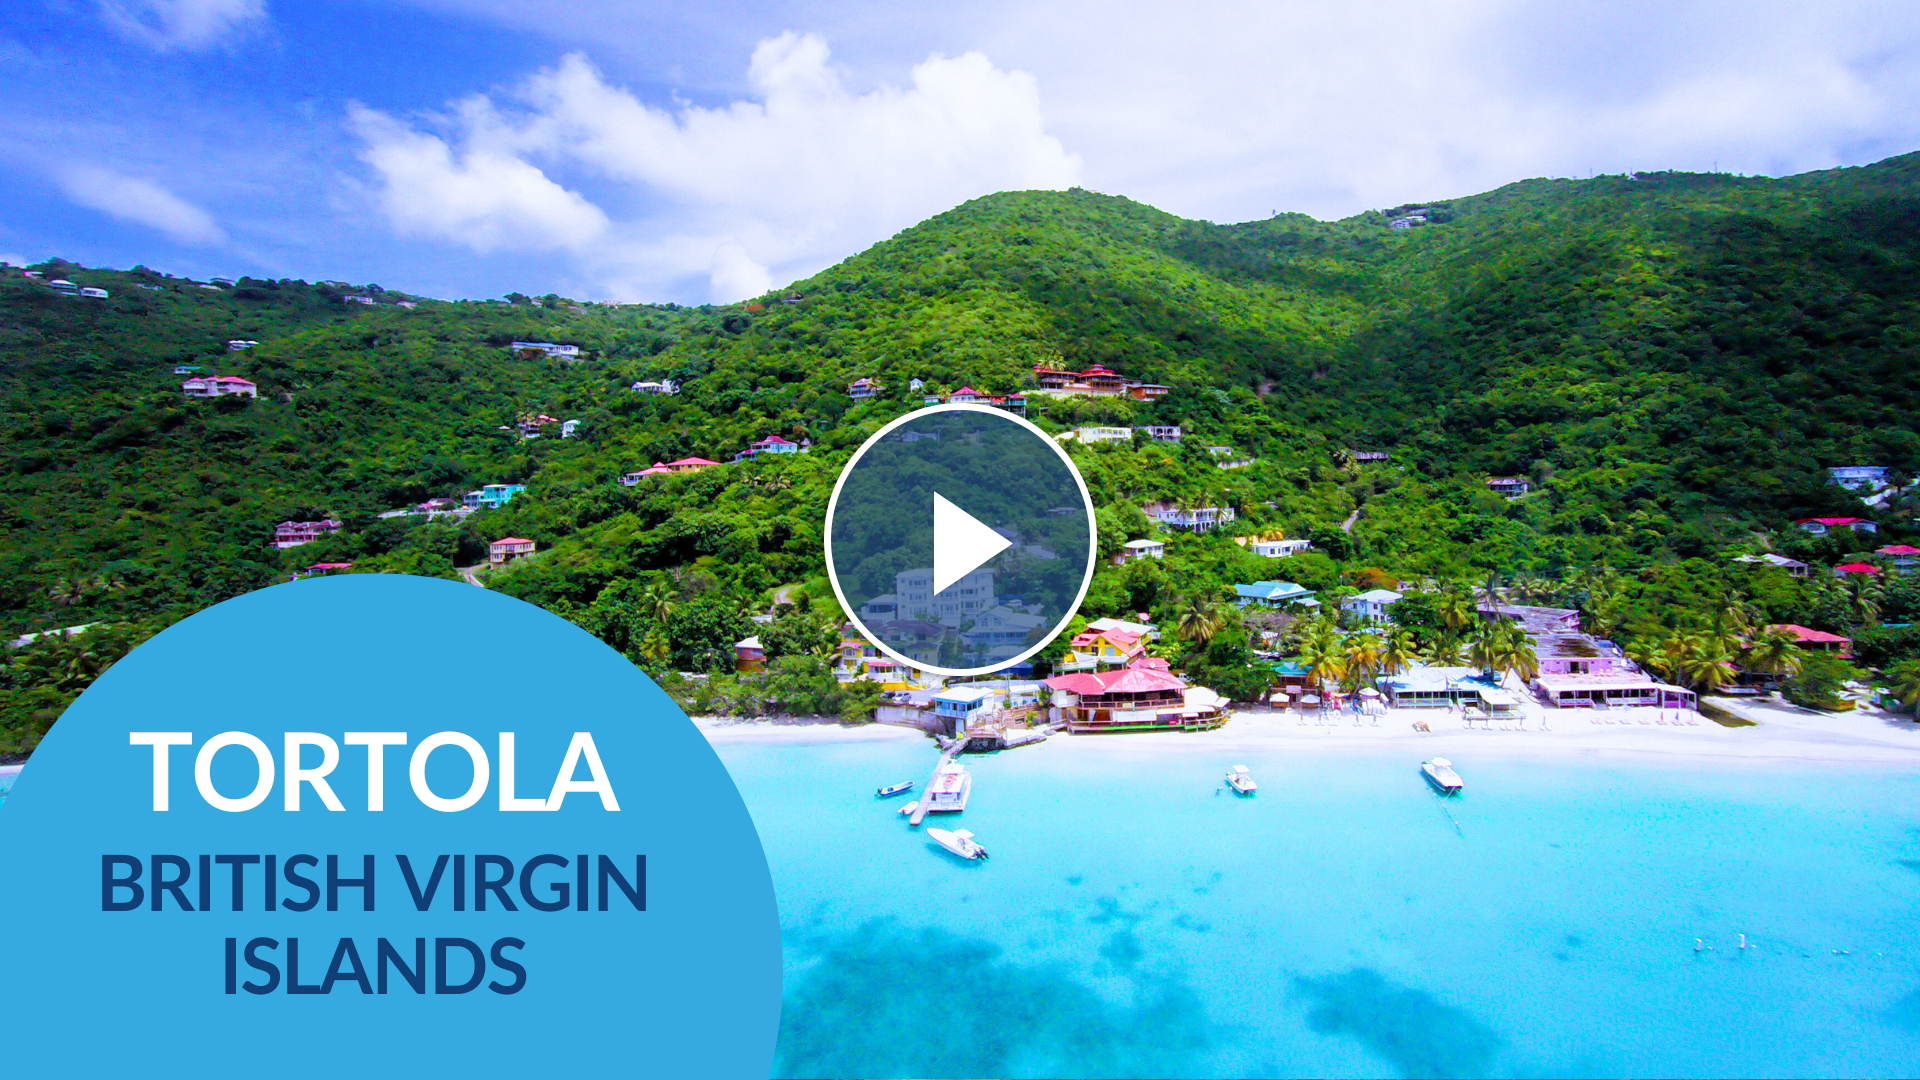 Tortola, British Virgin Islands